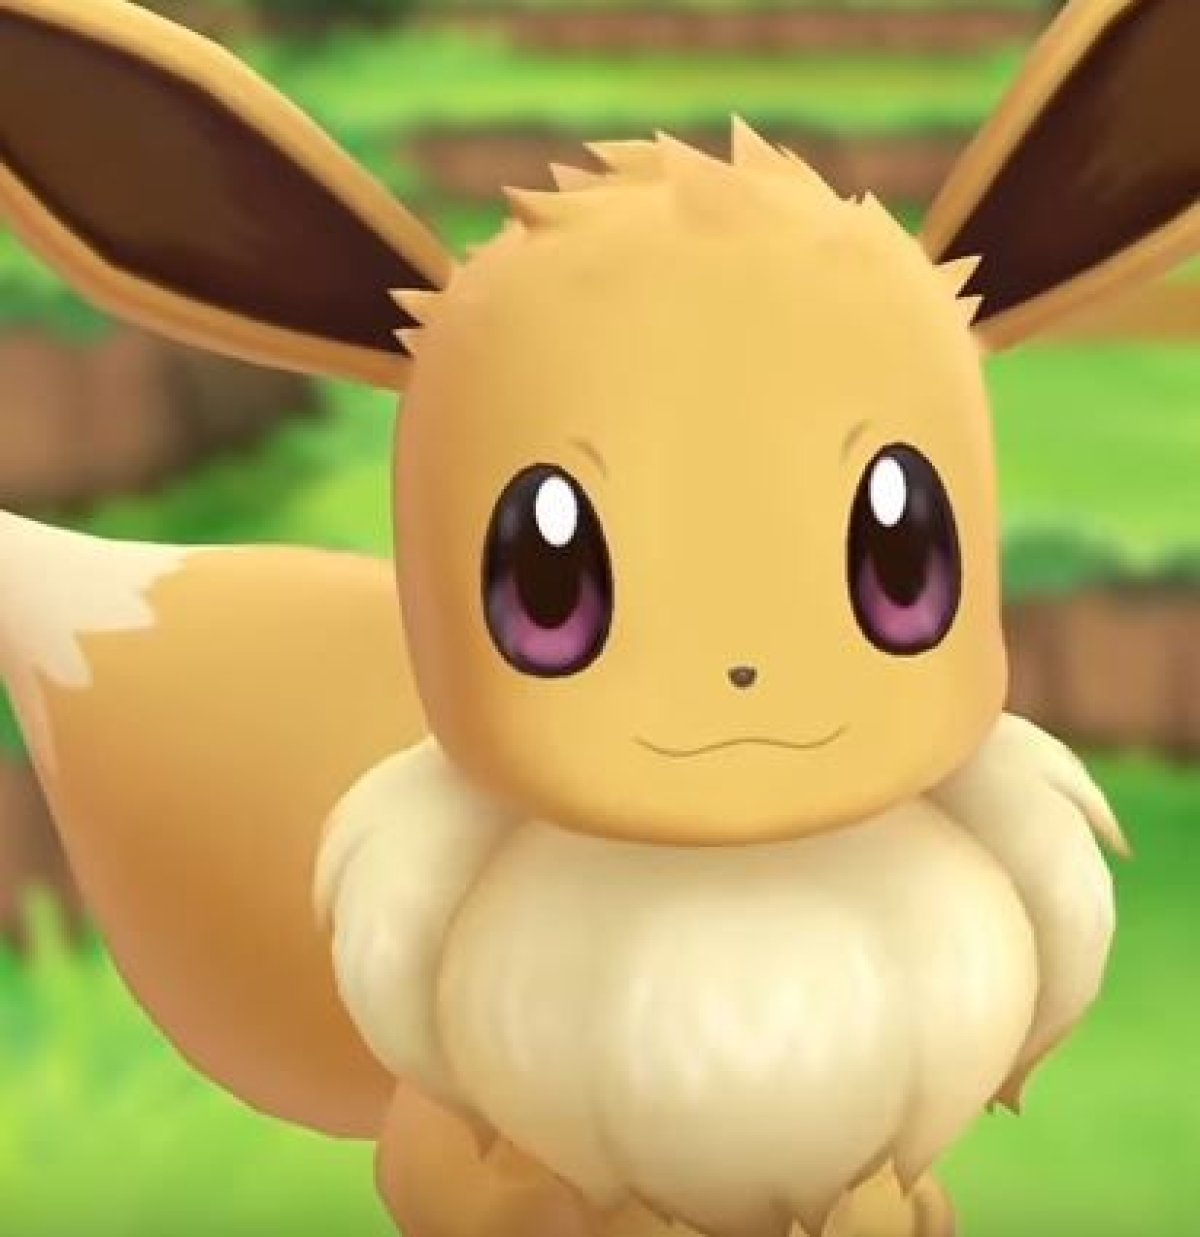 New information revealed for Pokemon: Let's Go, Pikachu / Eevee